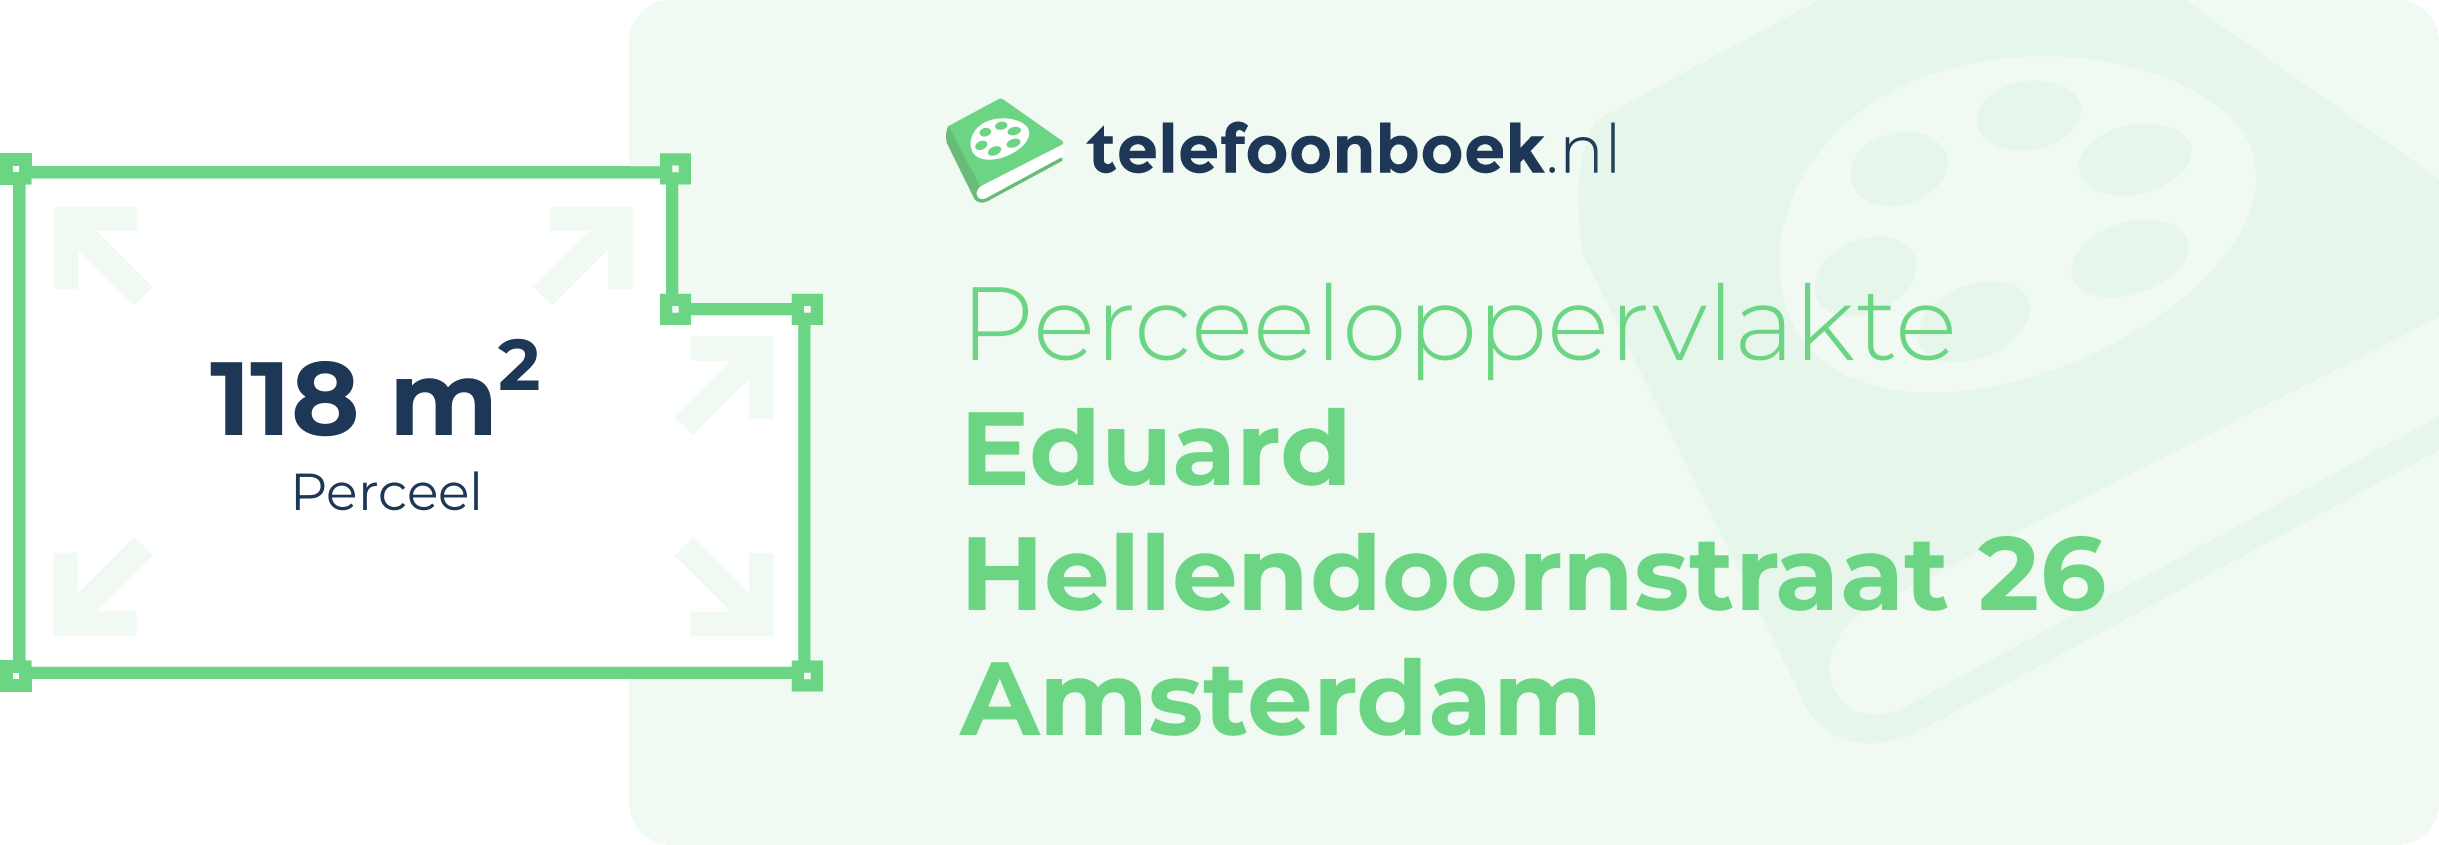 Perceeloppervlakte Eduard Hellendoornstraat 26 Amsterdam